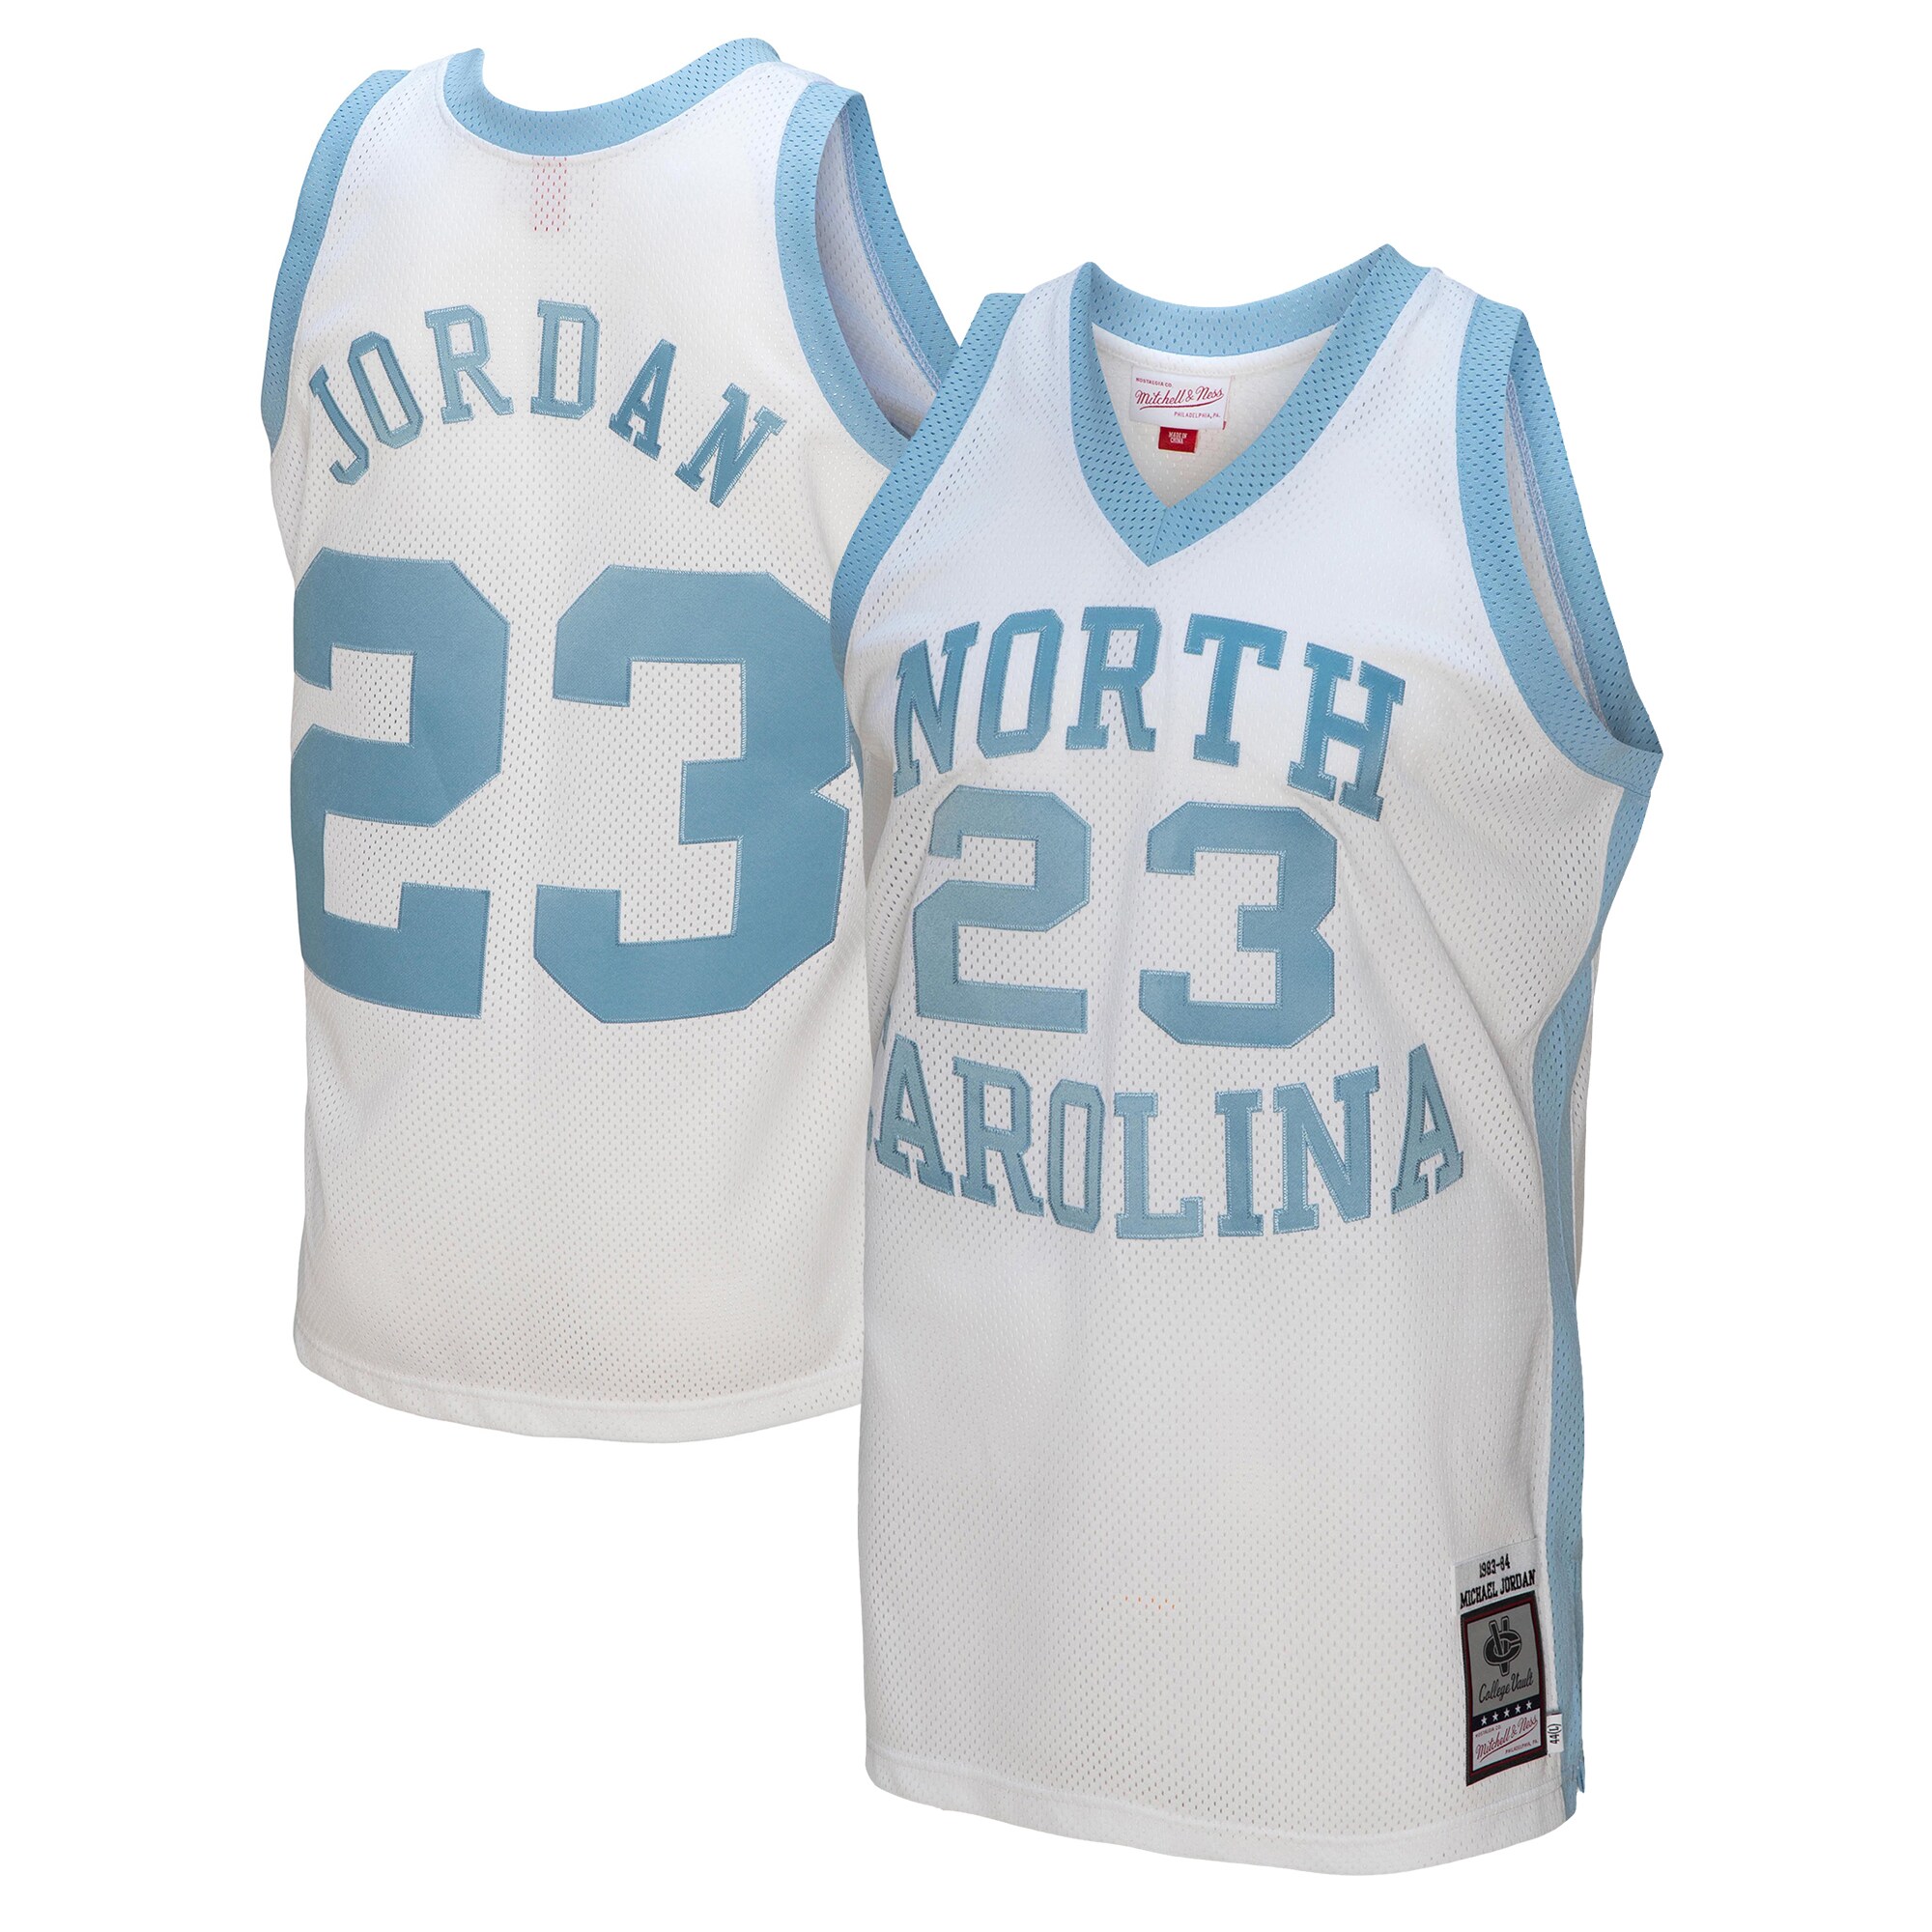 Michael Jordan North Carolina Tar Heels Mitchell & Ness 198384 Authentic Retired Player Jersey - White For Youth Women Men